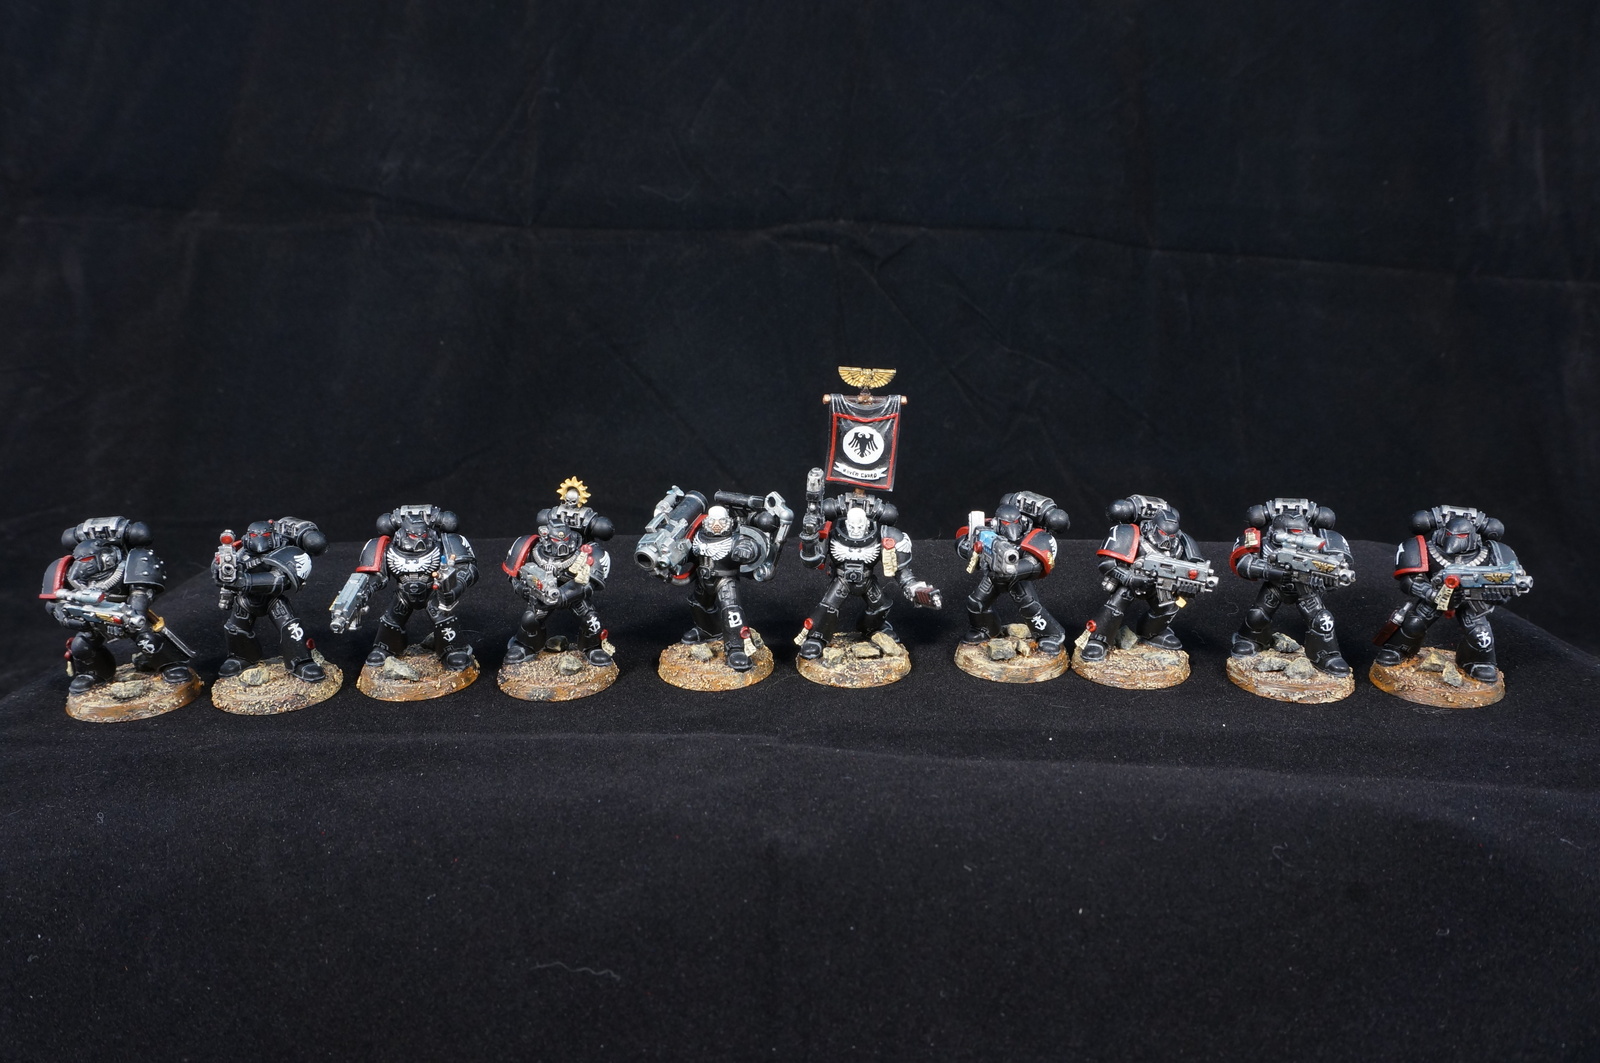 Raven Guard tactical squad - Longpost, Modeling, Miniature, Warhammer 40k, Raven guard, Wh miniatures, My